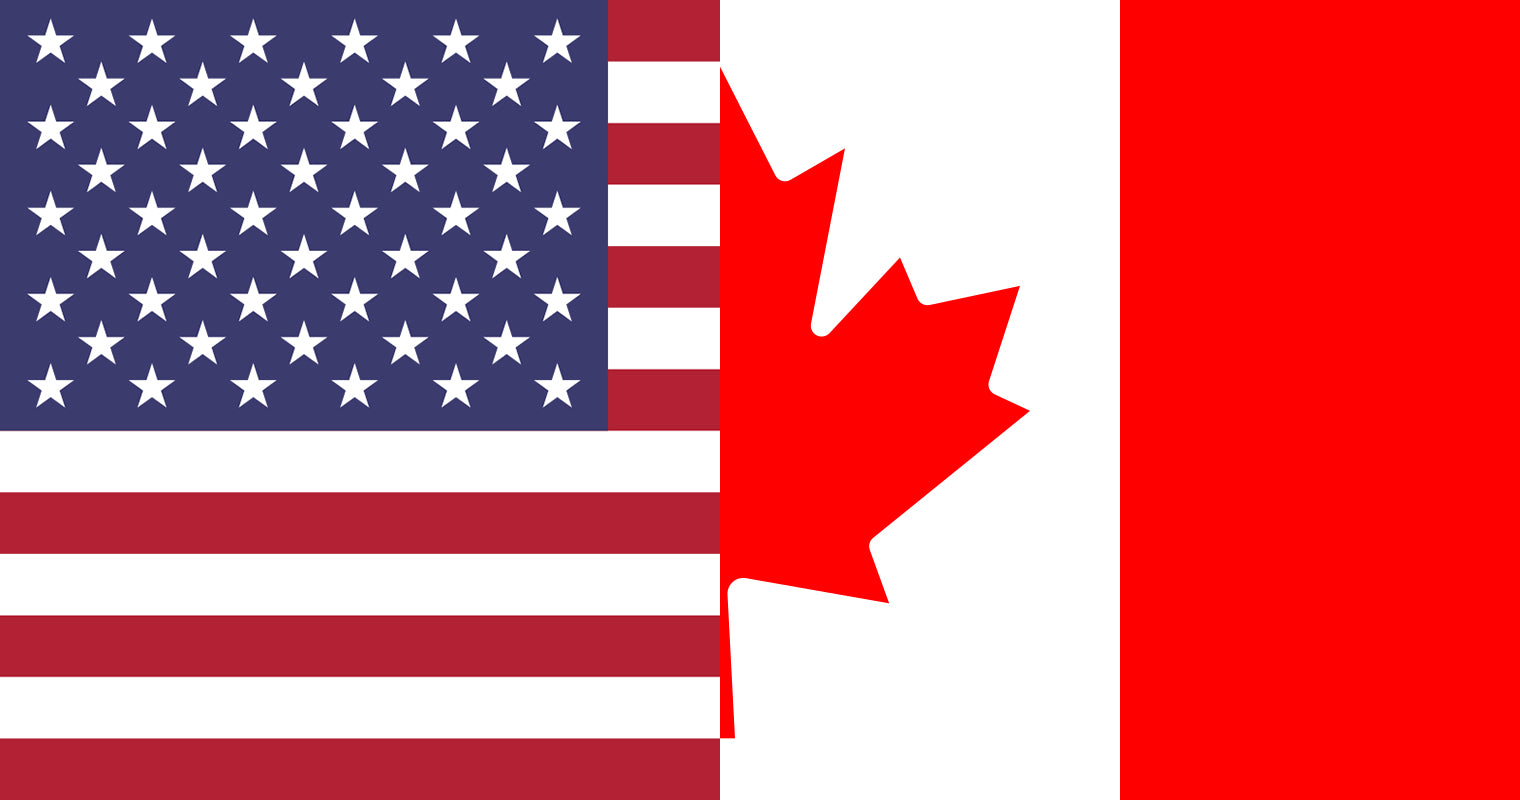 United States of America & Canada